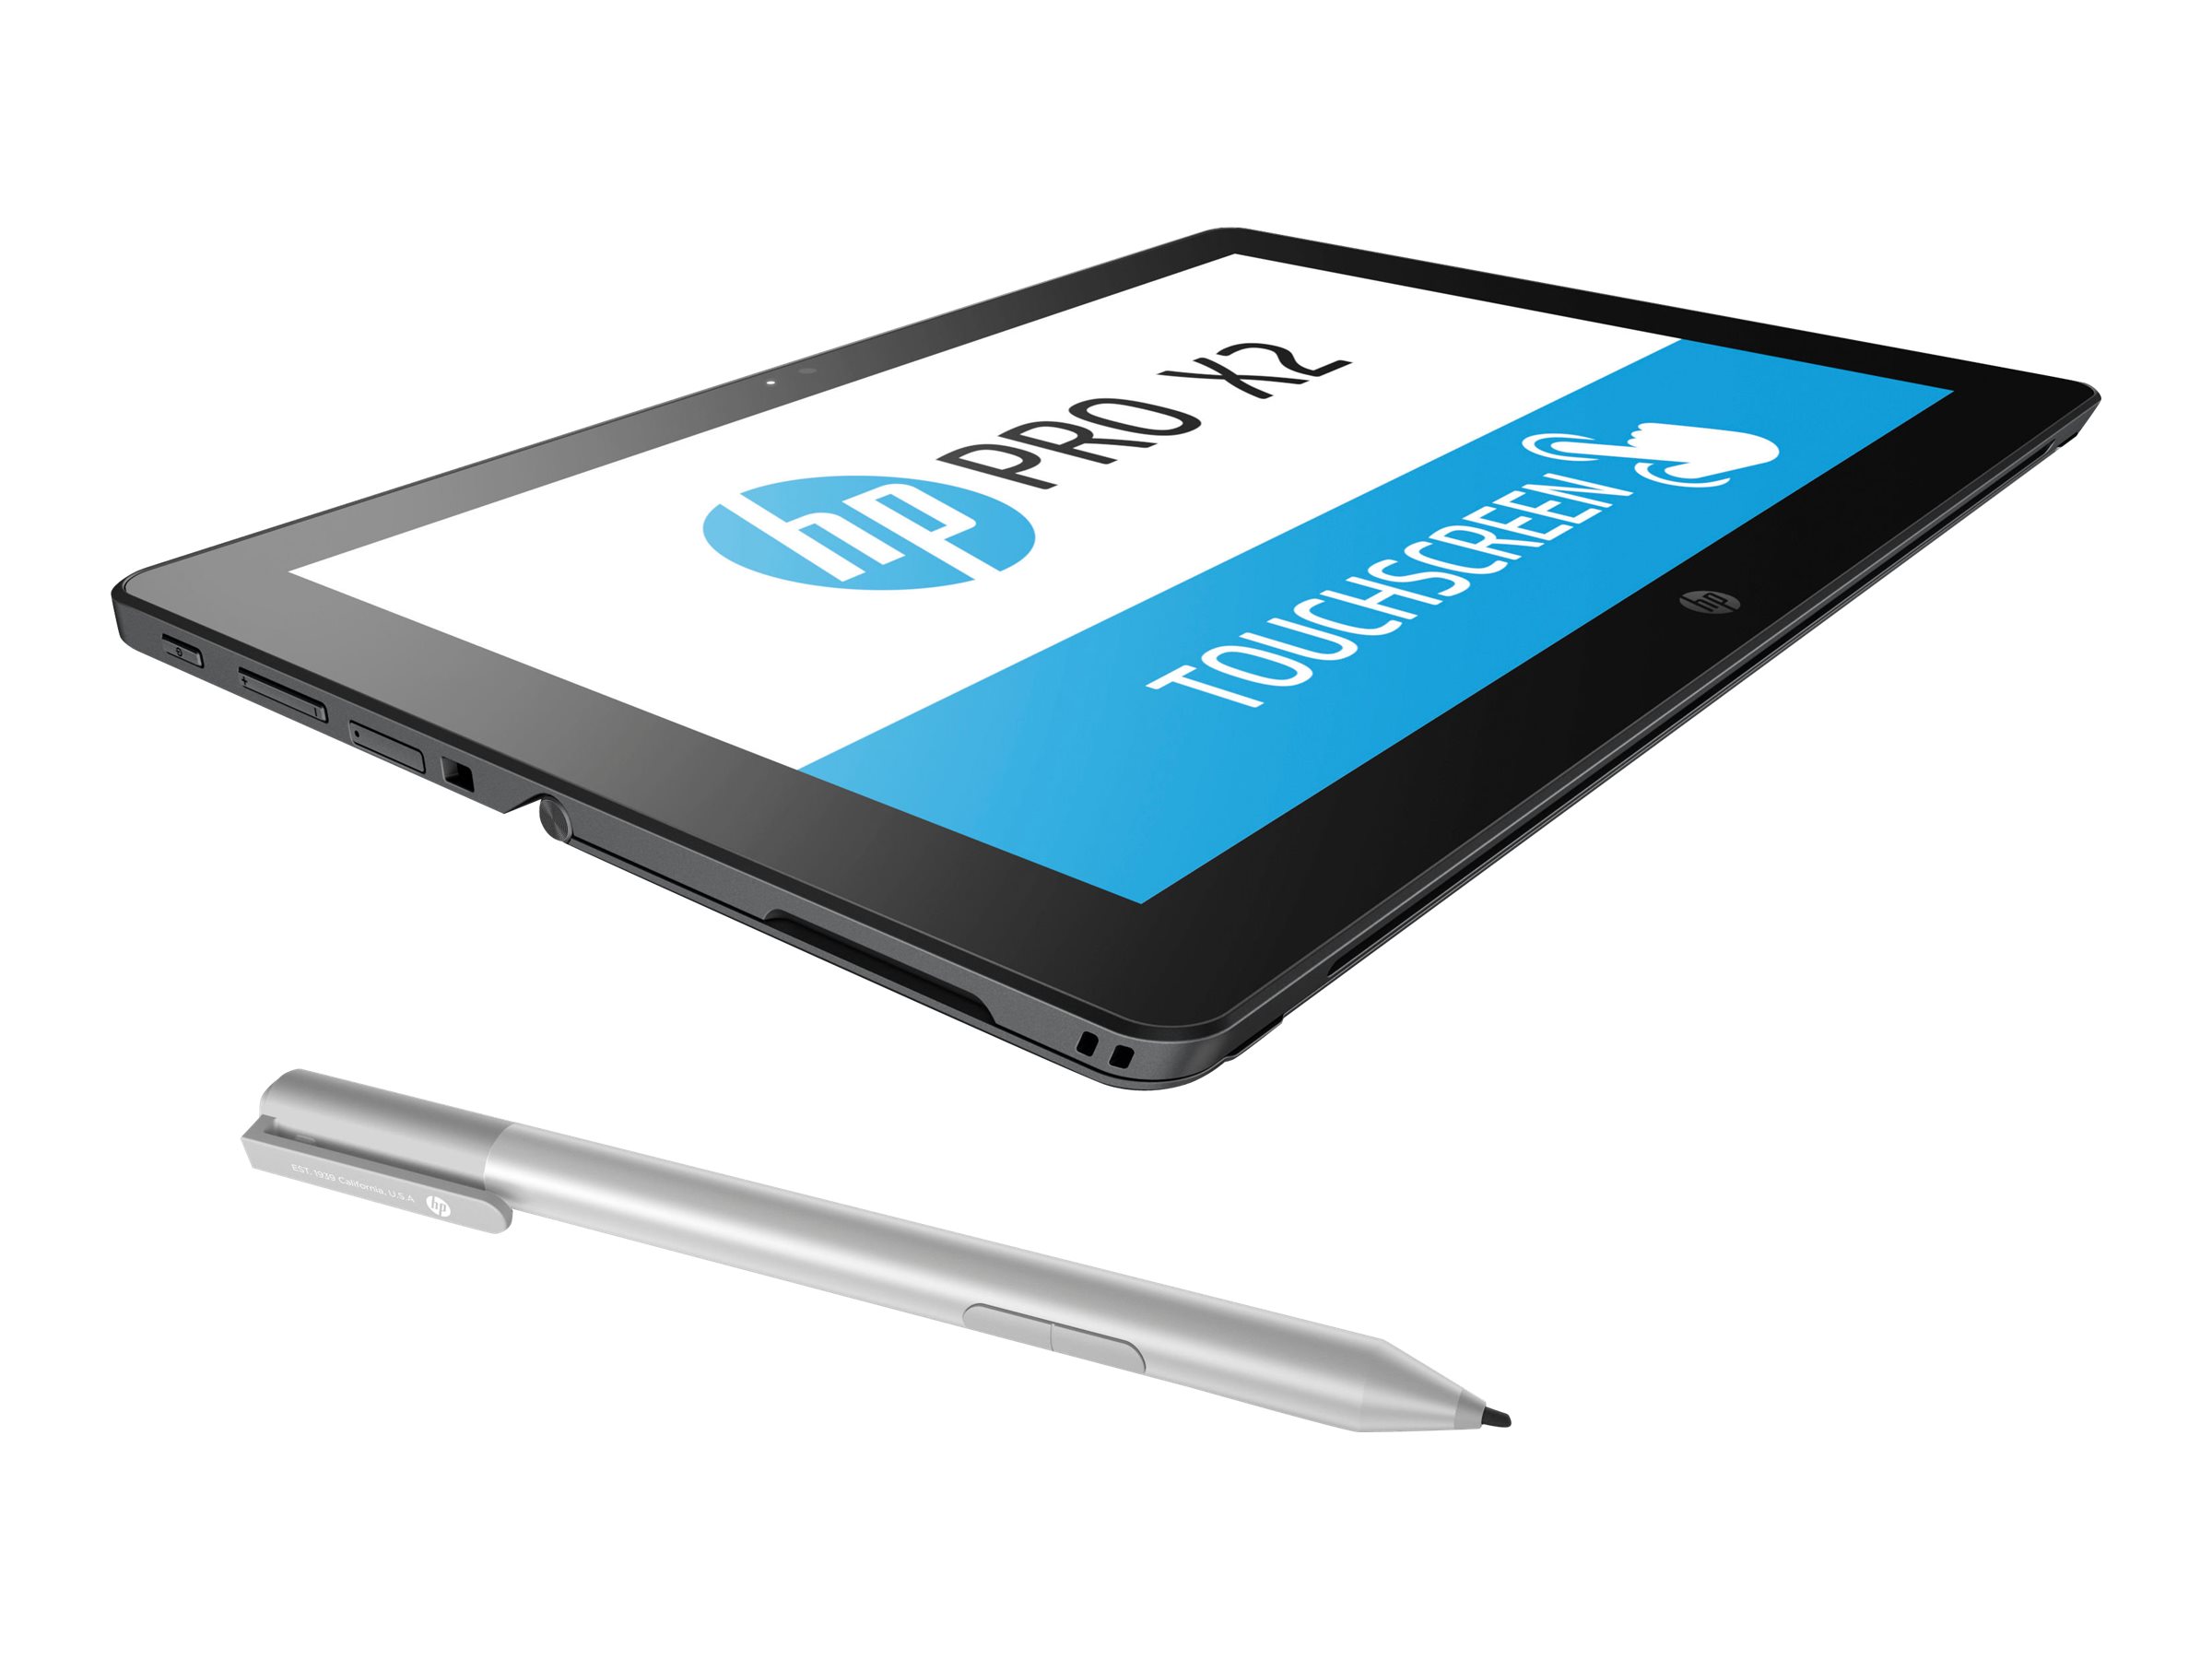 HP Pro x2 612 G2 - Tablet | www.shi.ca